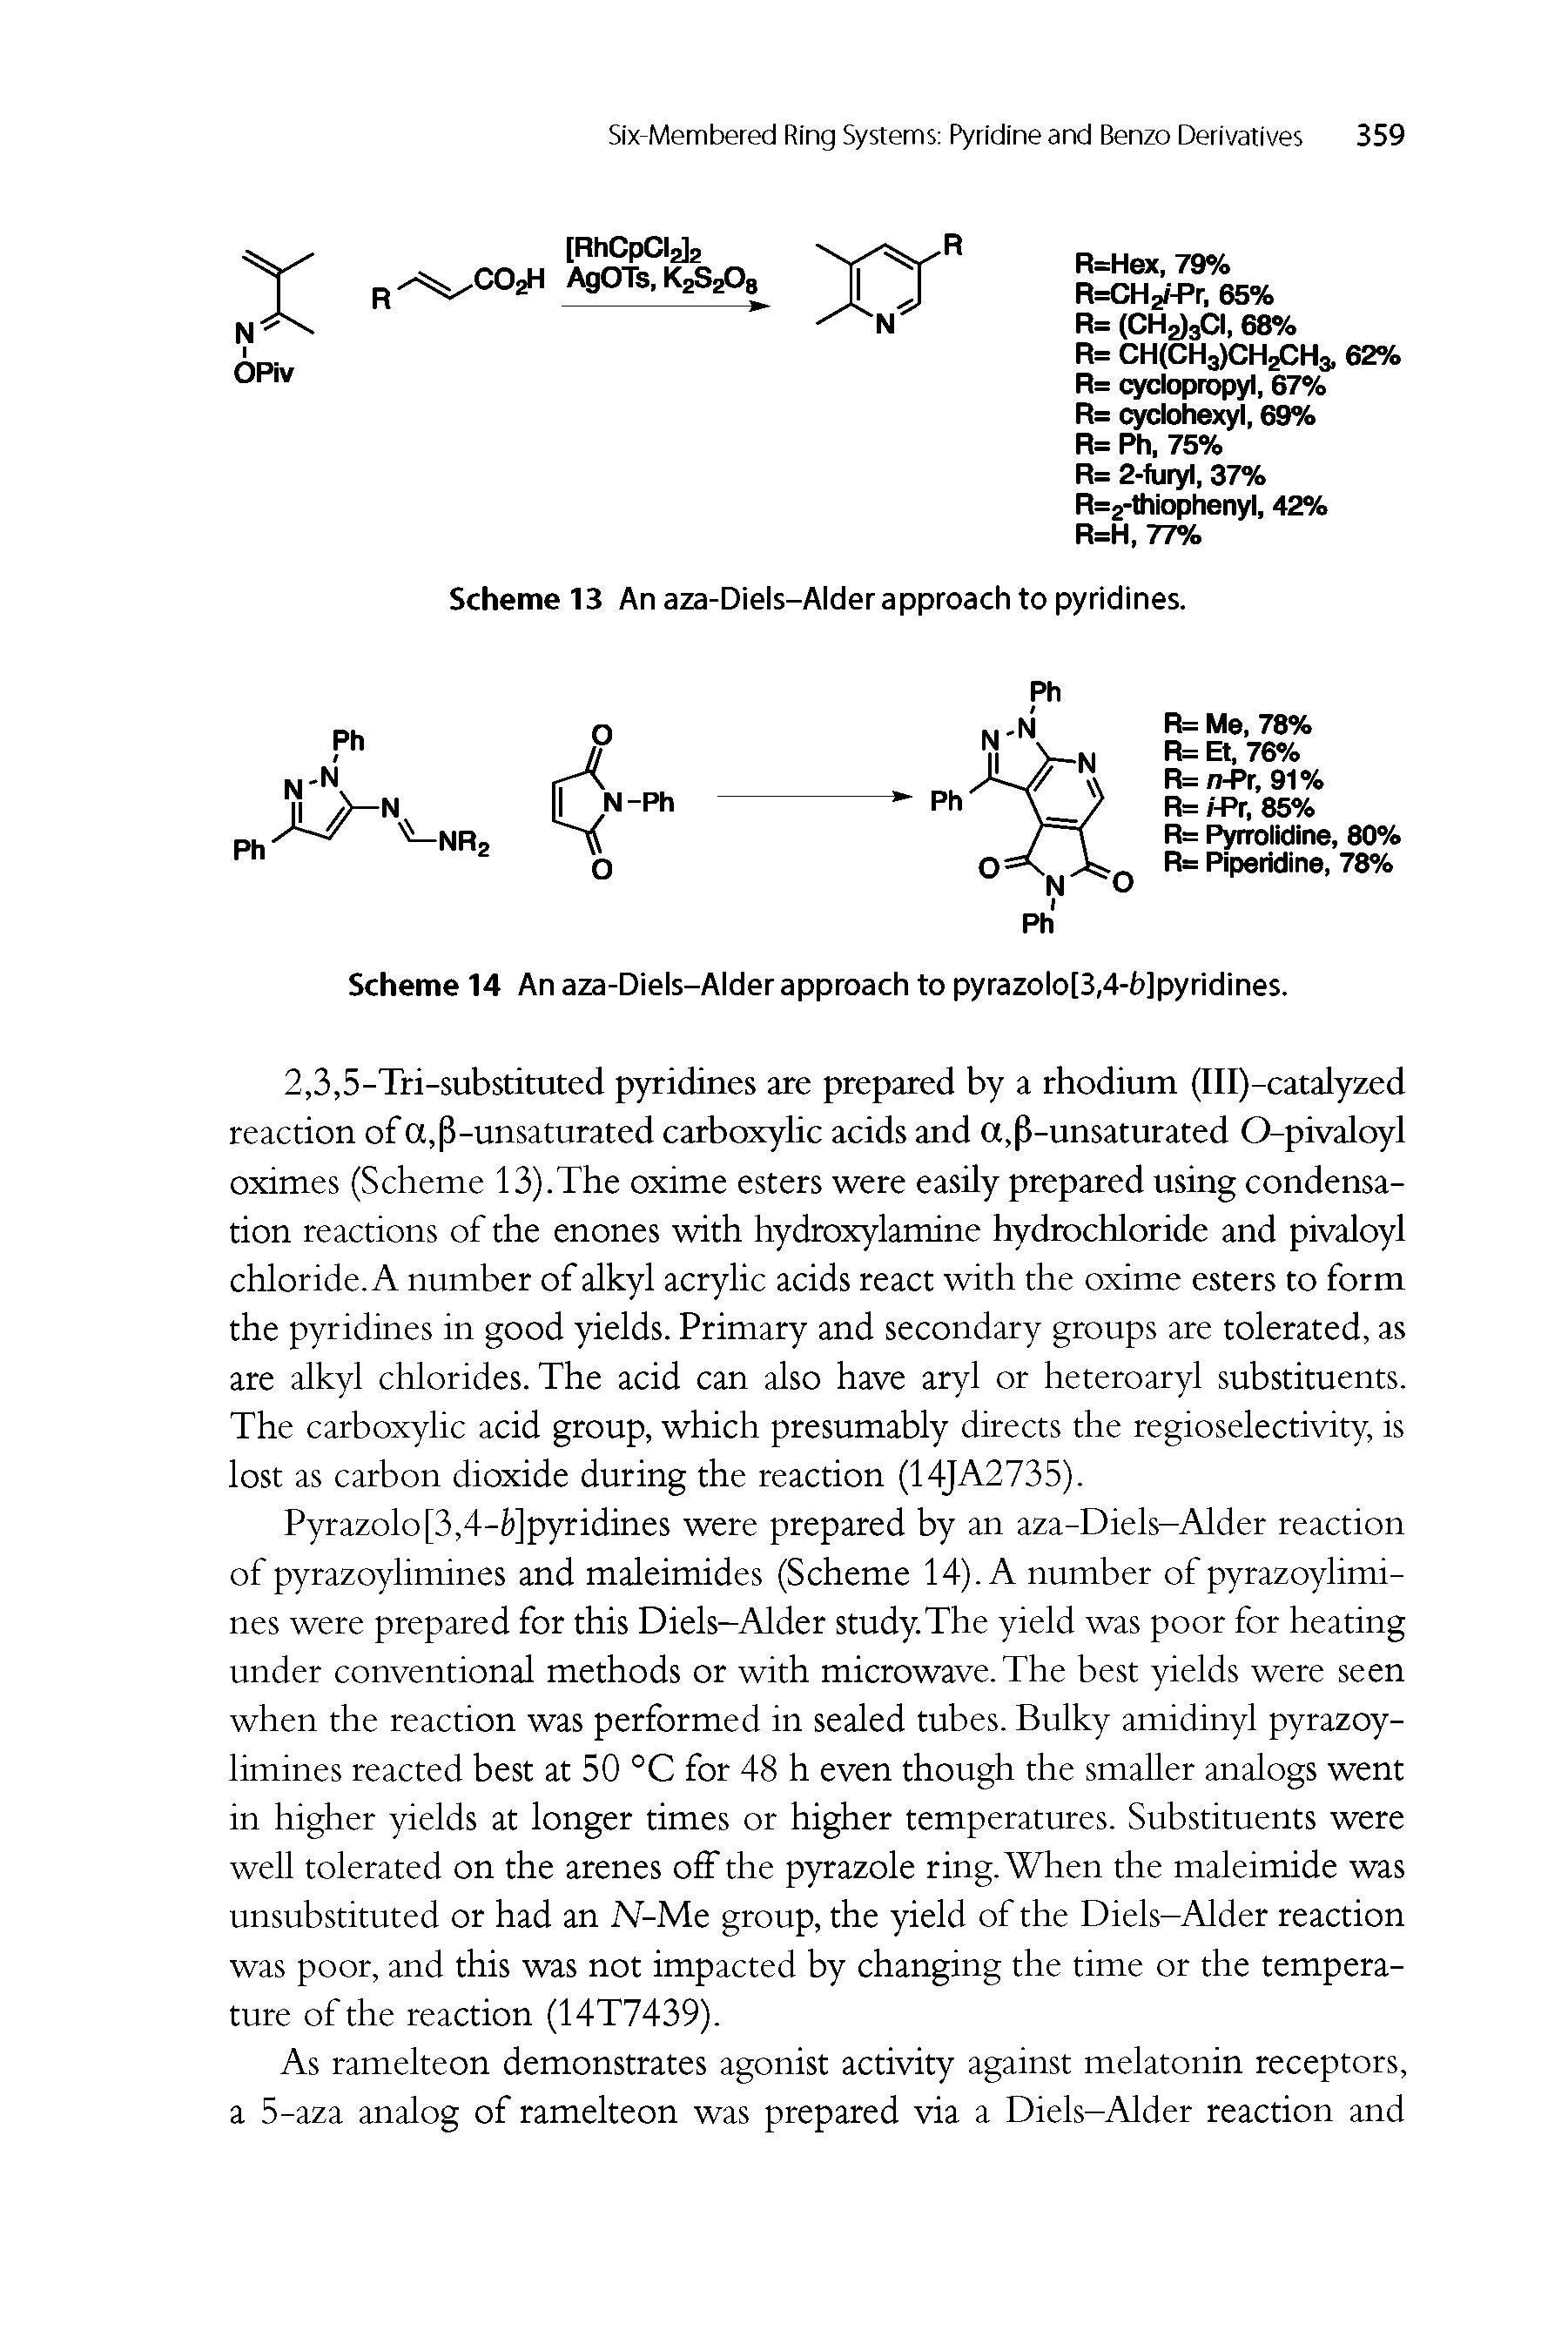 Scheme 14 An aza-Diels-Alder approach to pyrazolo[3,4-b]pyridines.